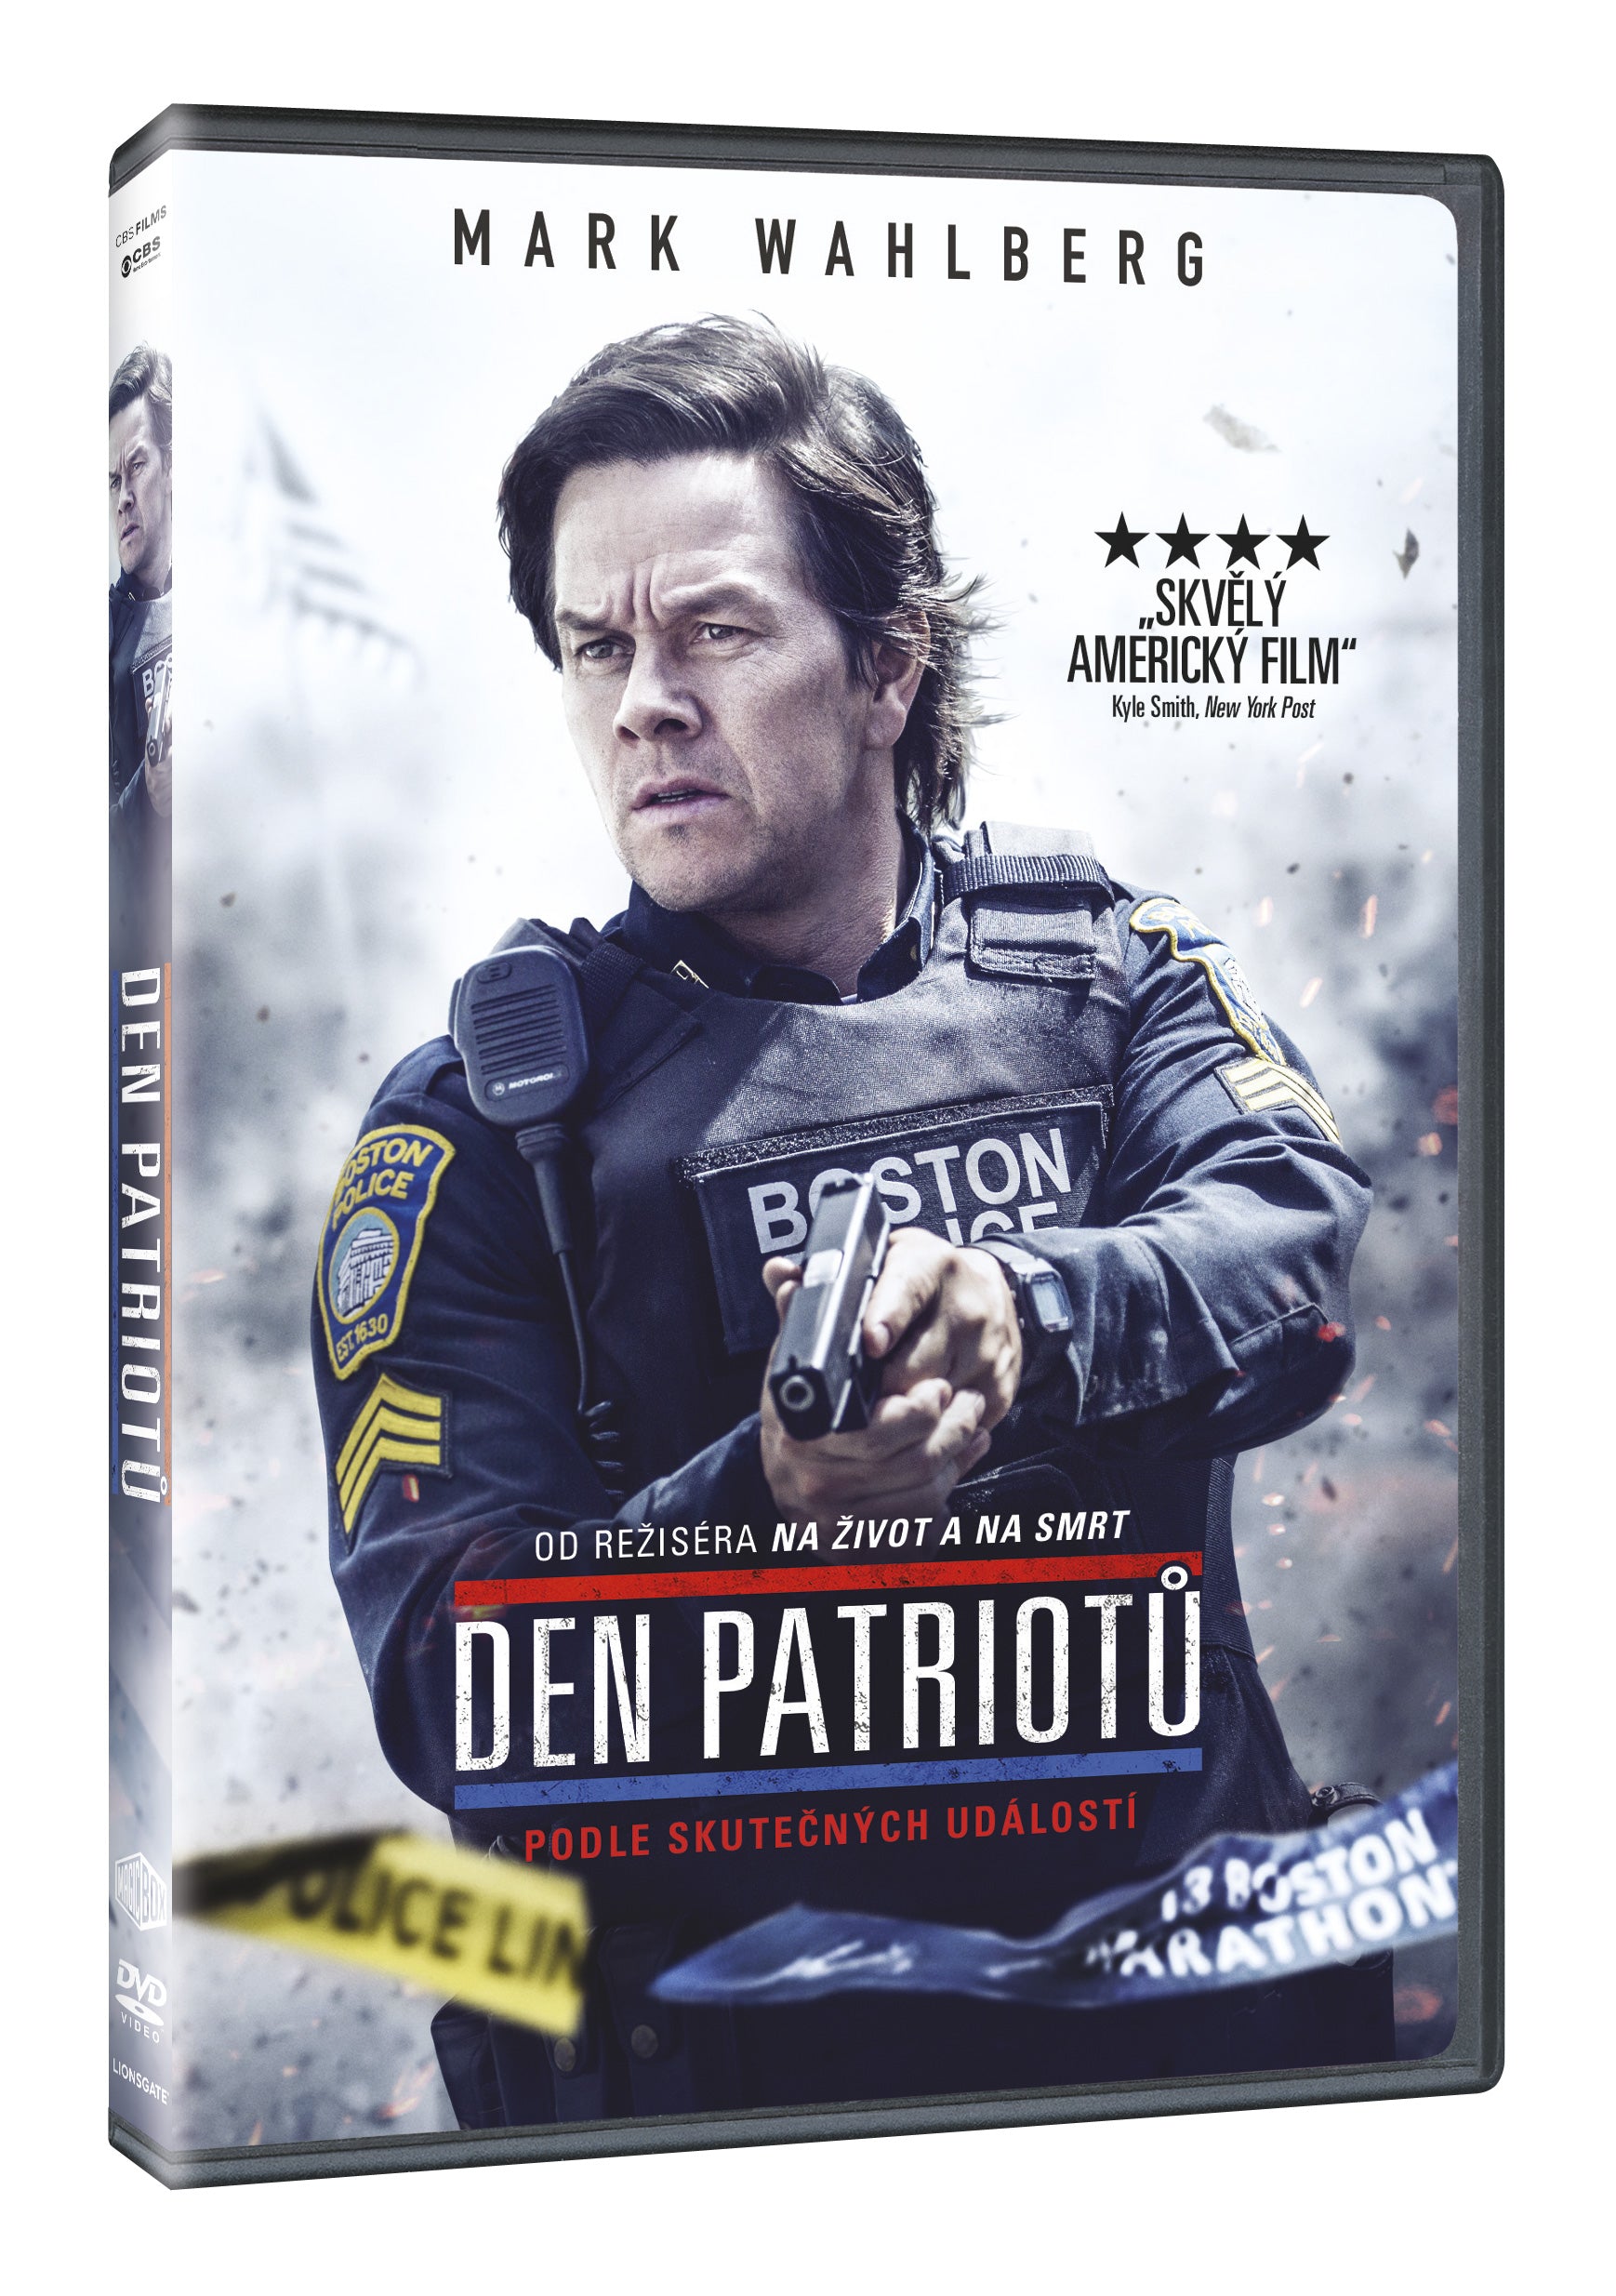 Den patriotu DVD / Patriots Day